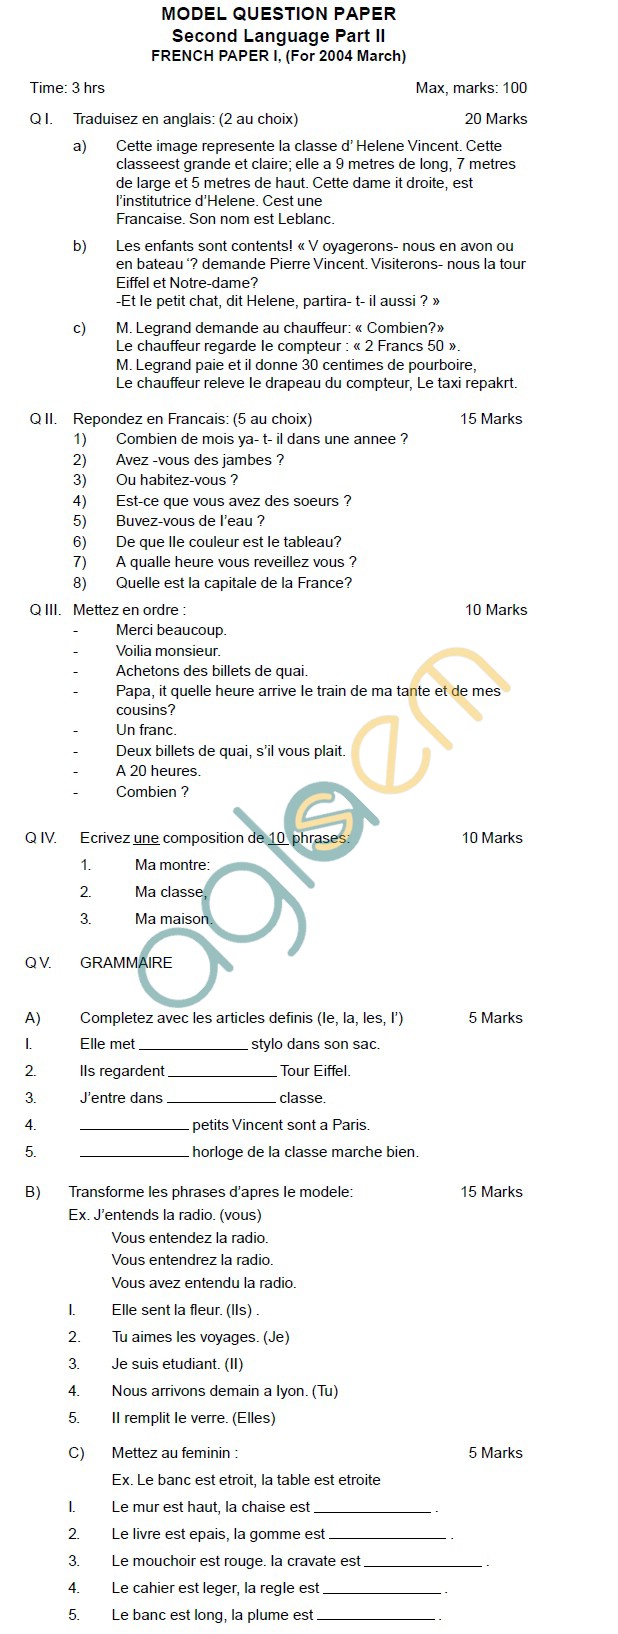 AP Board Intermediate I Year French Model Question Paper